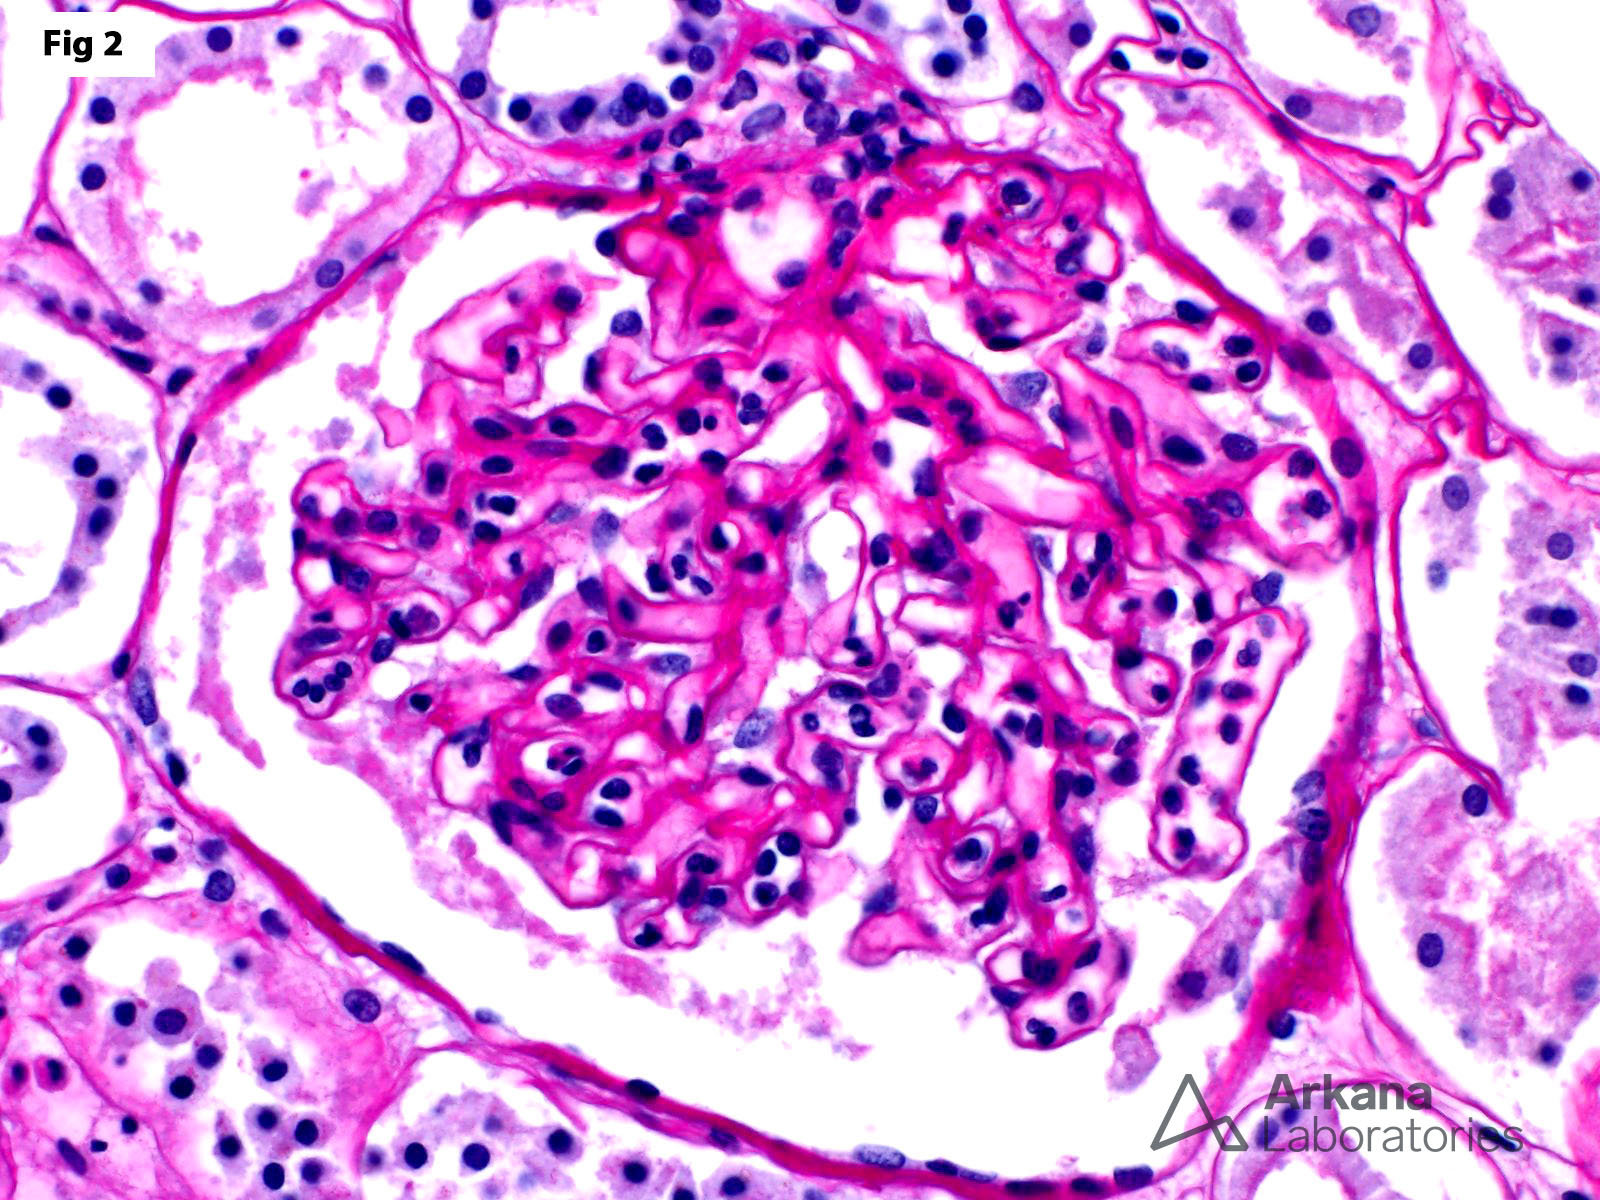 margination of neutrophils, renal vein thrombosis